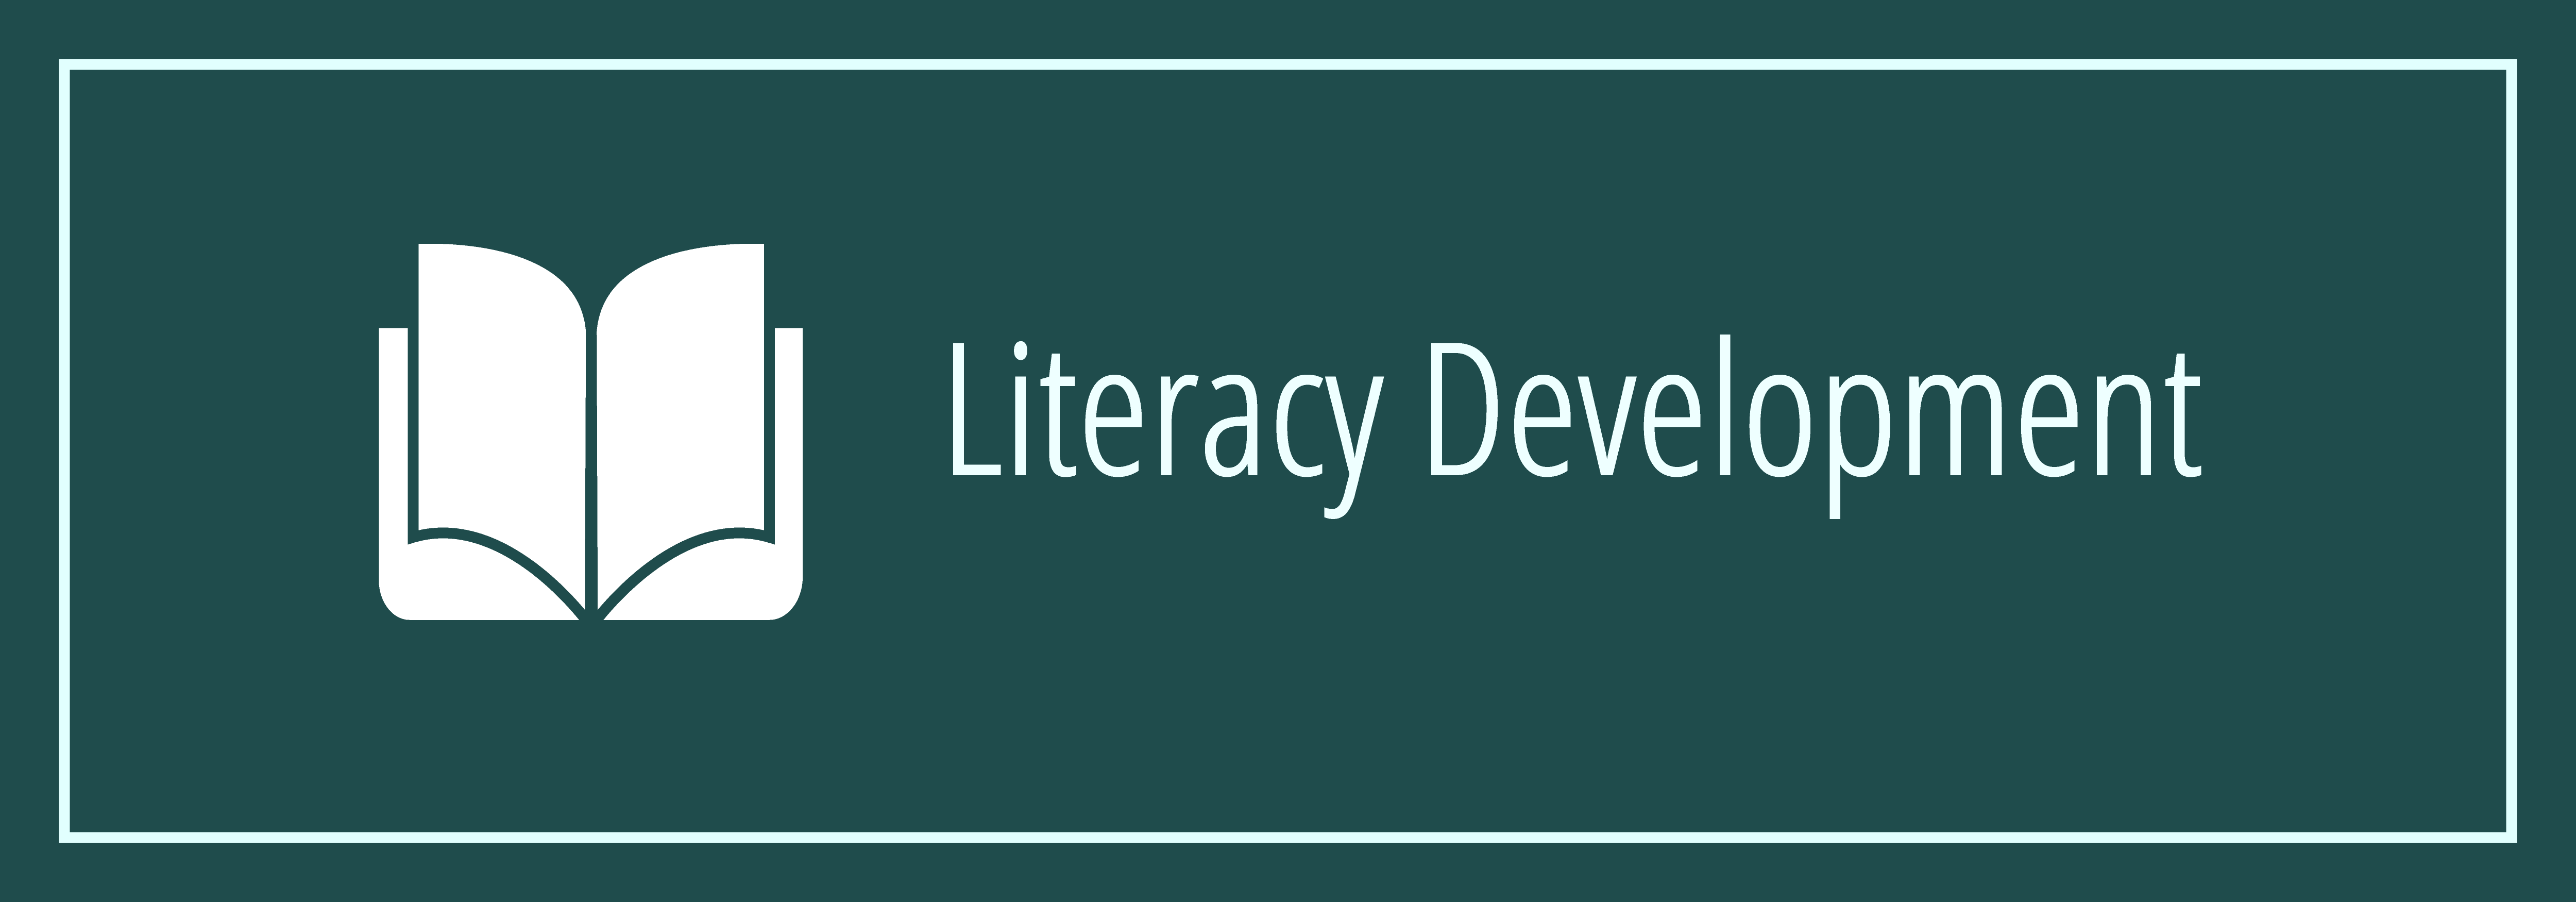 literacy development image